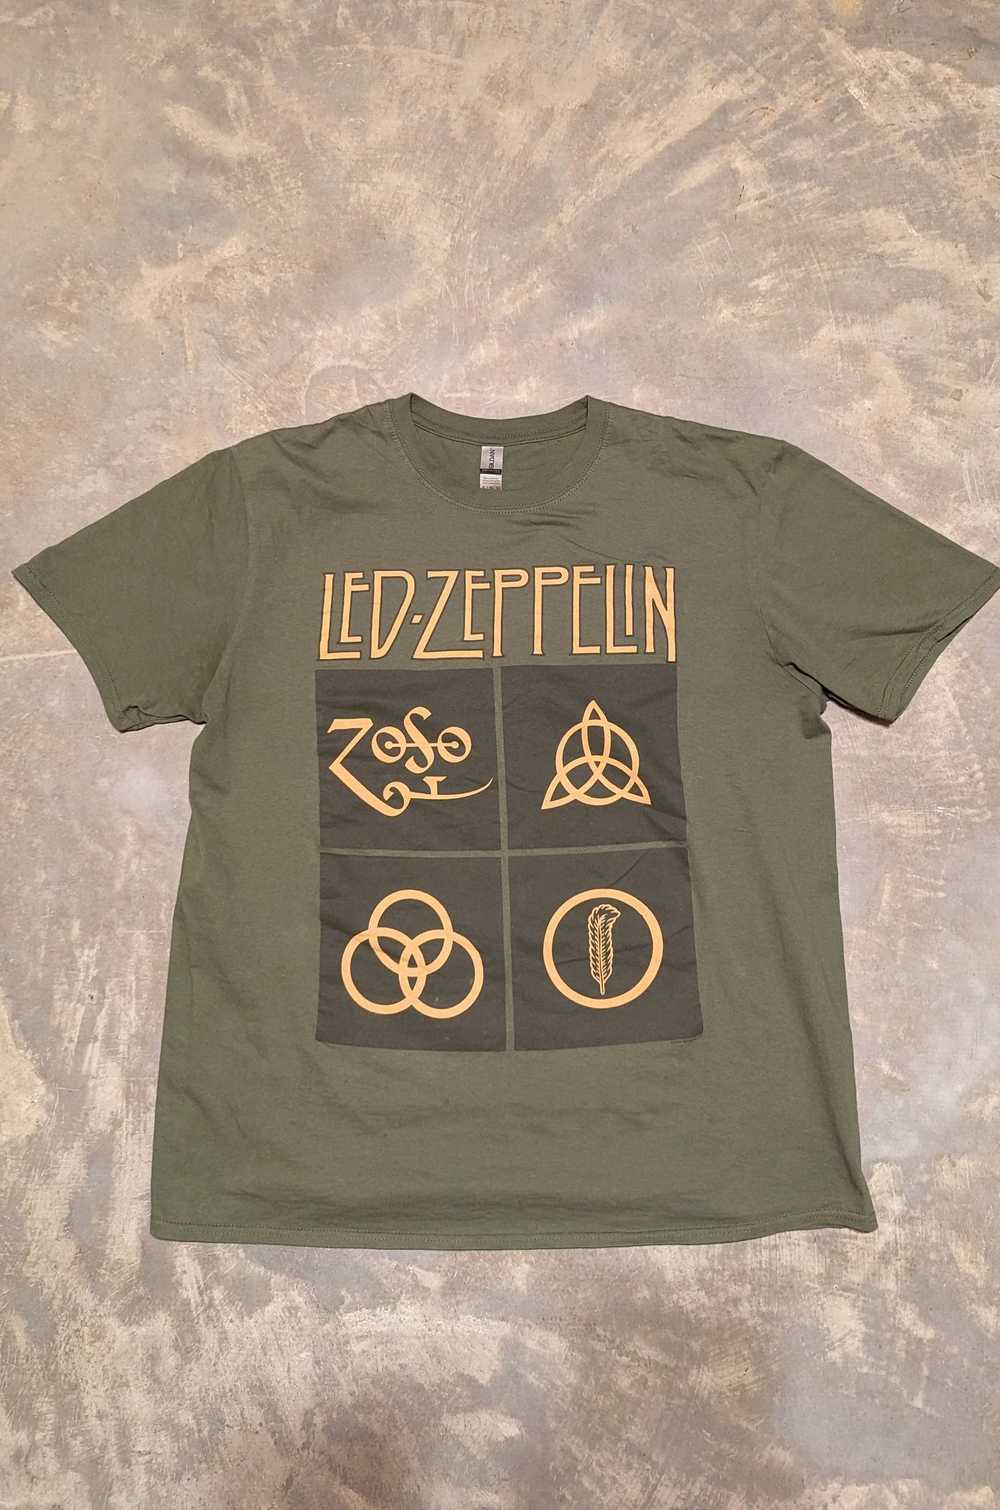 Band Tees × Led Zeppelin Led Zeppelin Tee - image 1